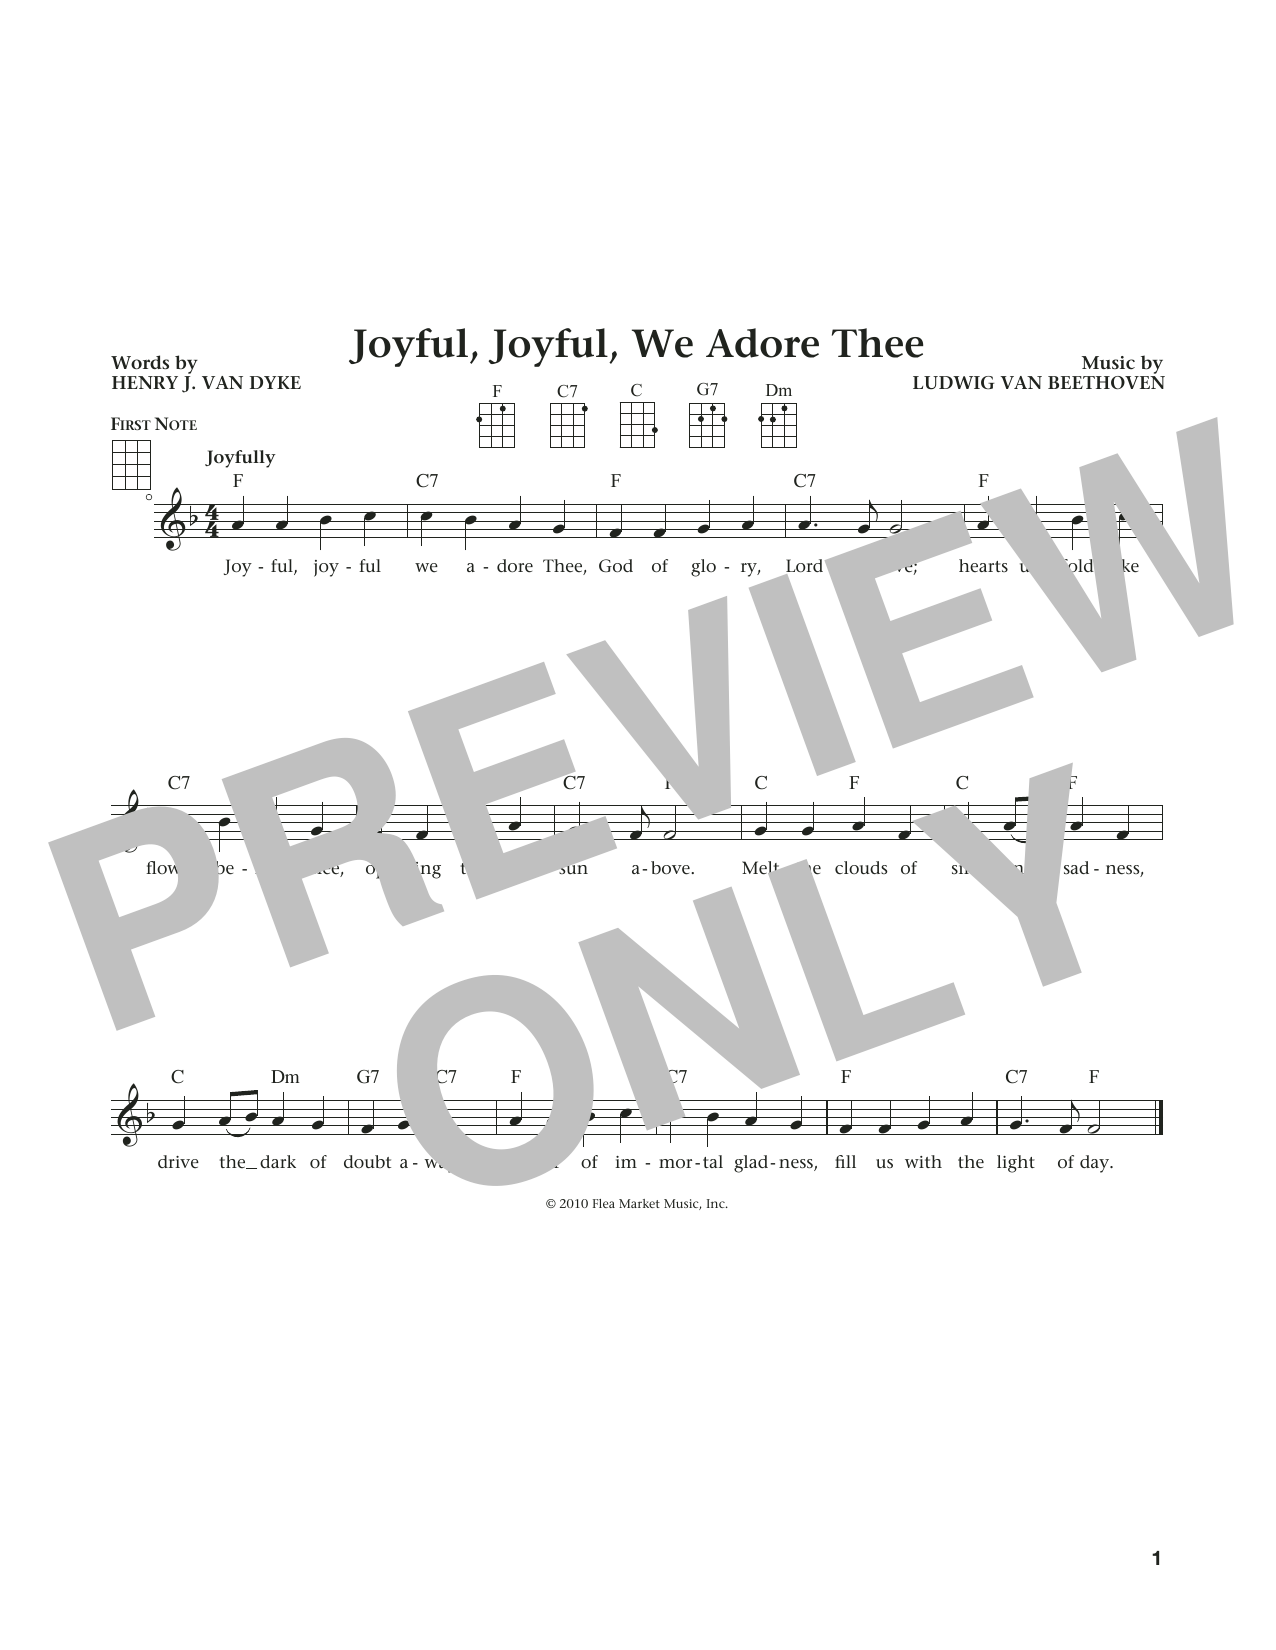 Ludwig van Beethoven Joyful, Joyful, We Adore Thee (from The Daily Ukulele) (arr. Liz and Jim Beloff) Sheet Music Notes & Chords for Ukulele - Download or Print PDF